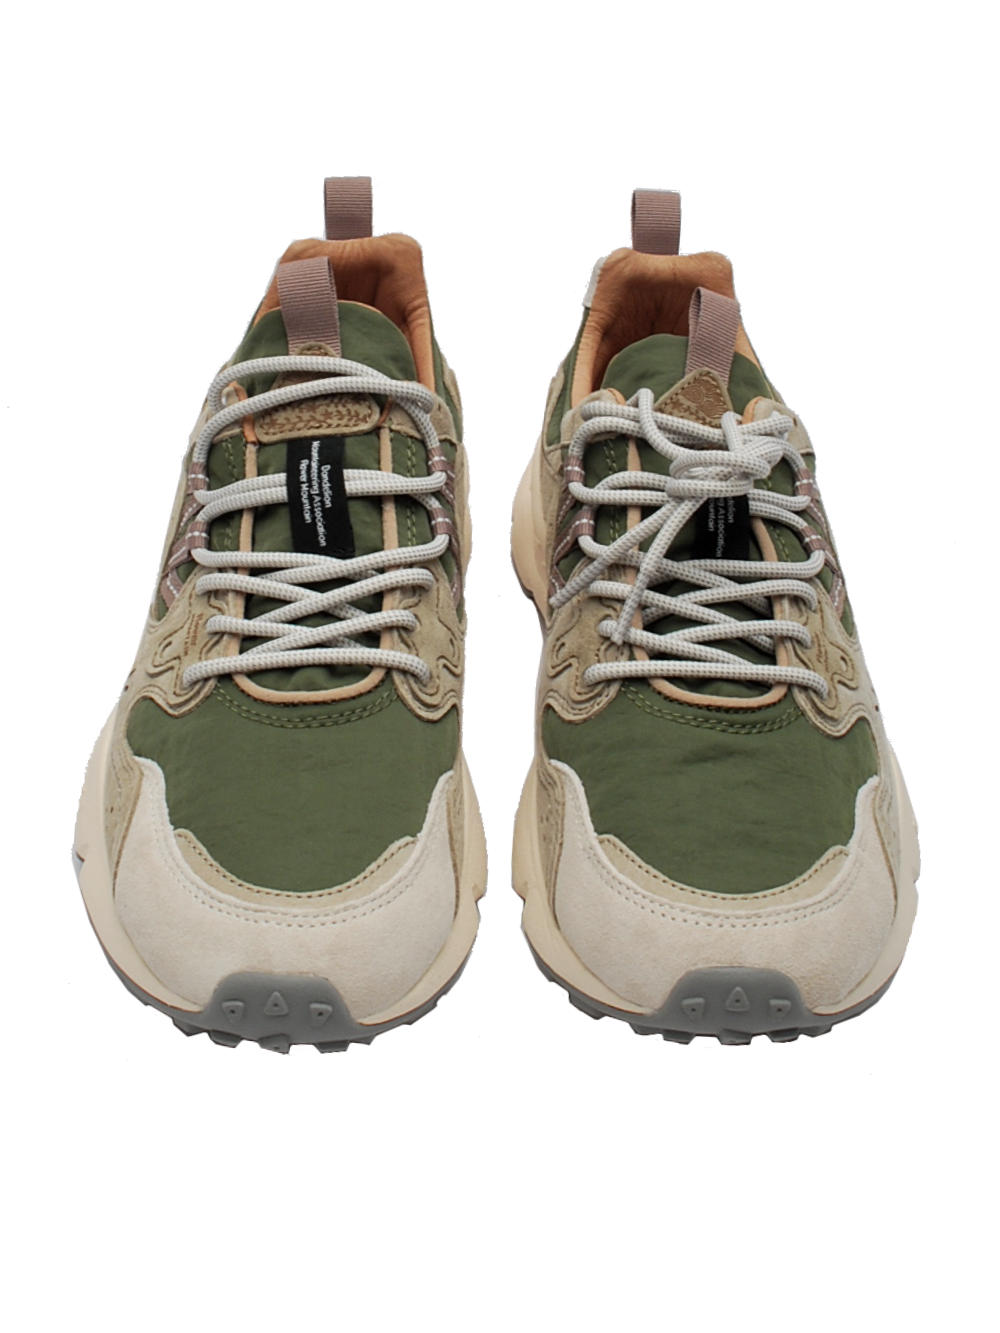 Flower mountain sneaker yamano 3 1n48 off white military green pe24